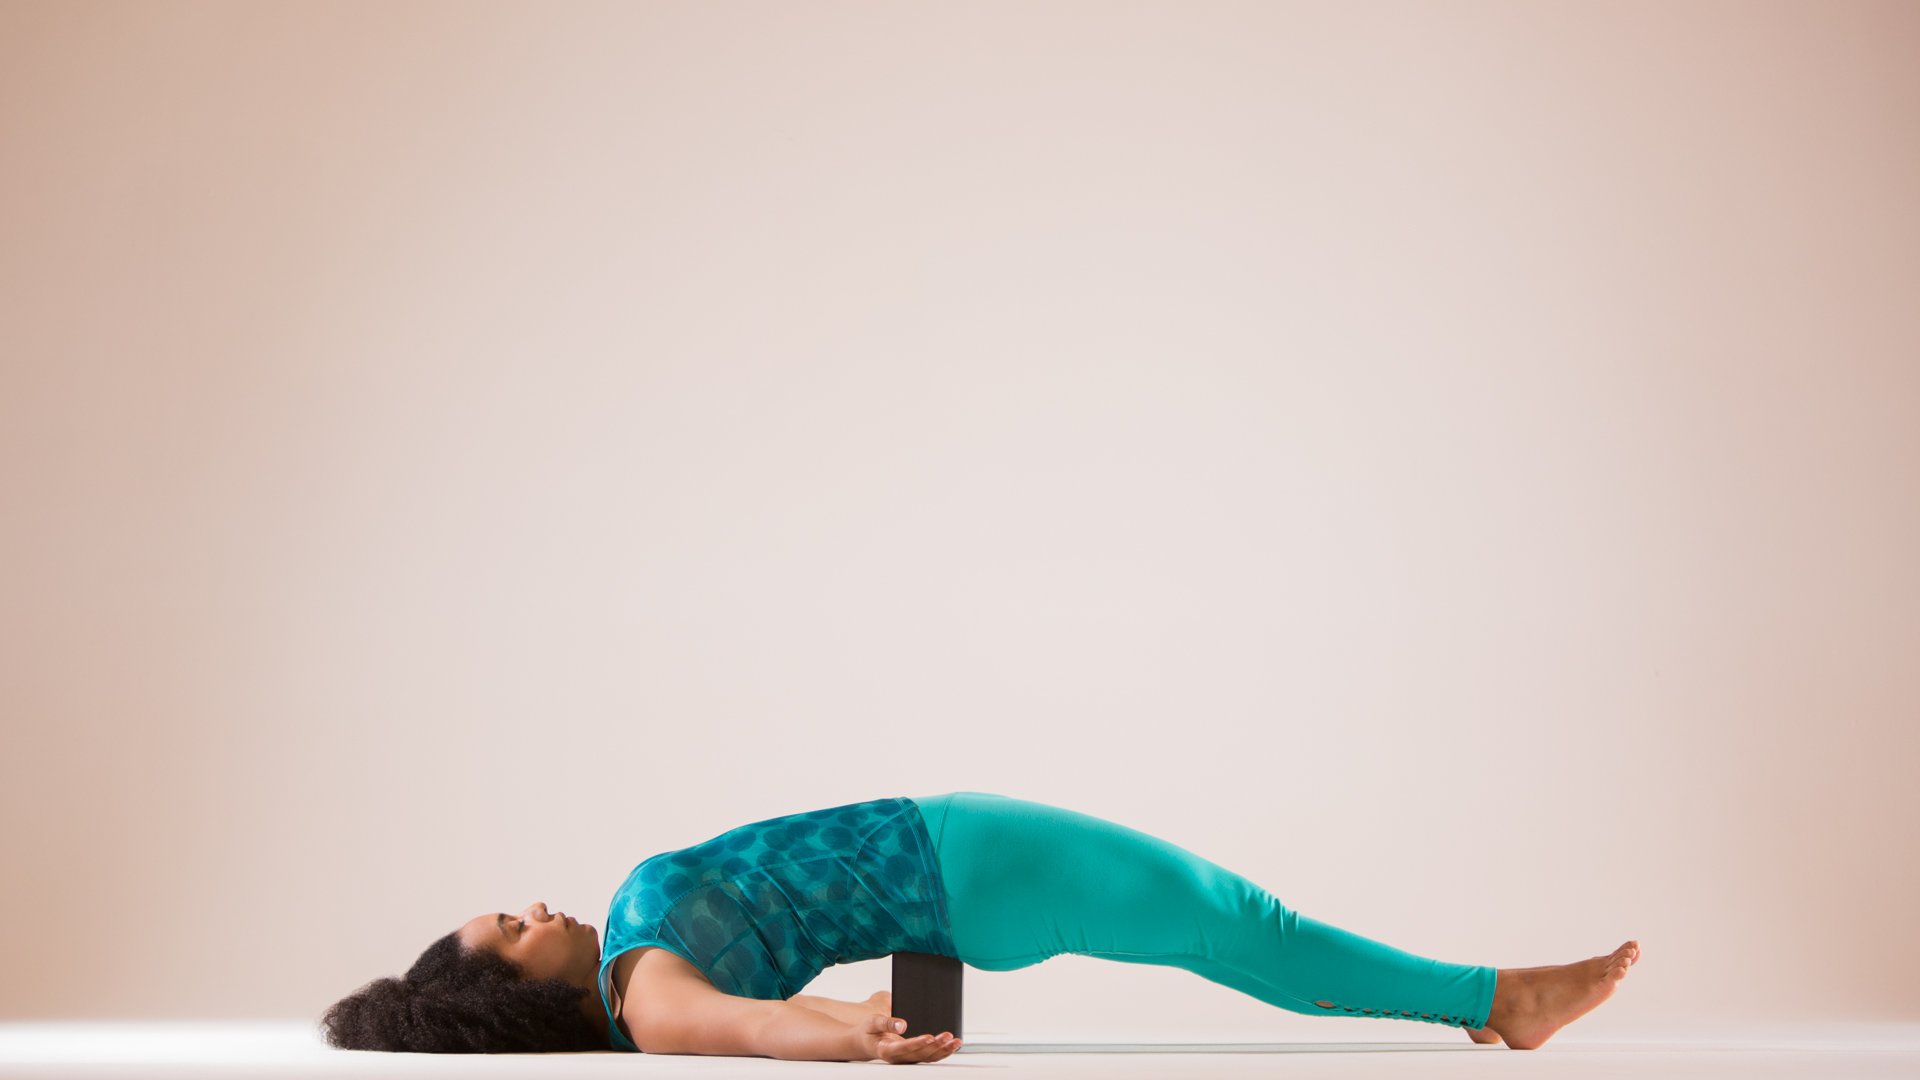 Premium Vector | Heart chakra yoga poses woman practicing yoga pose